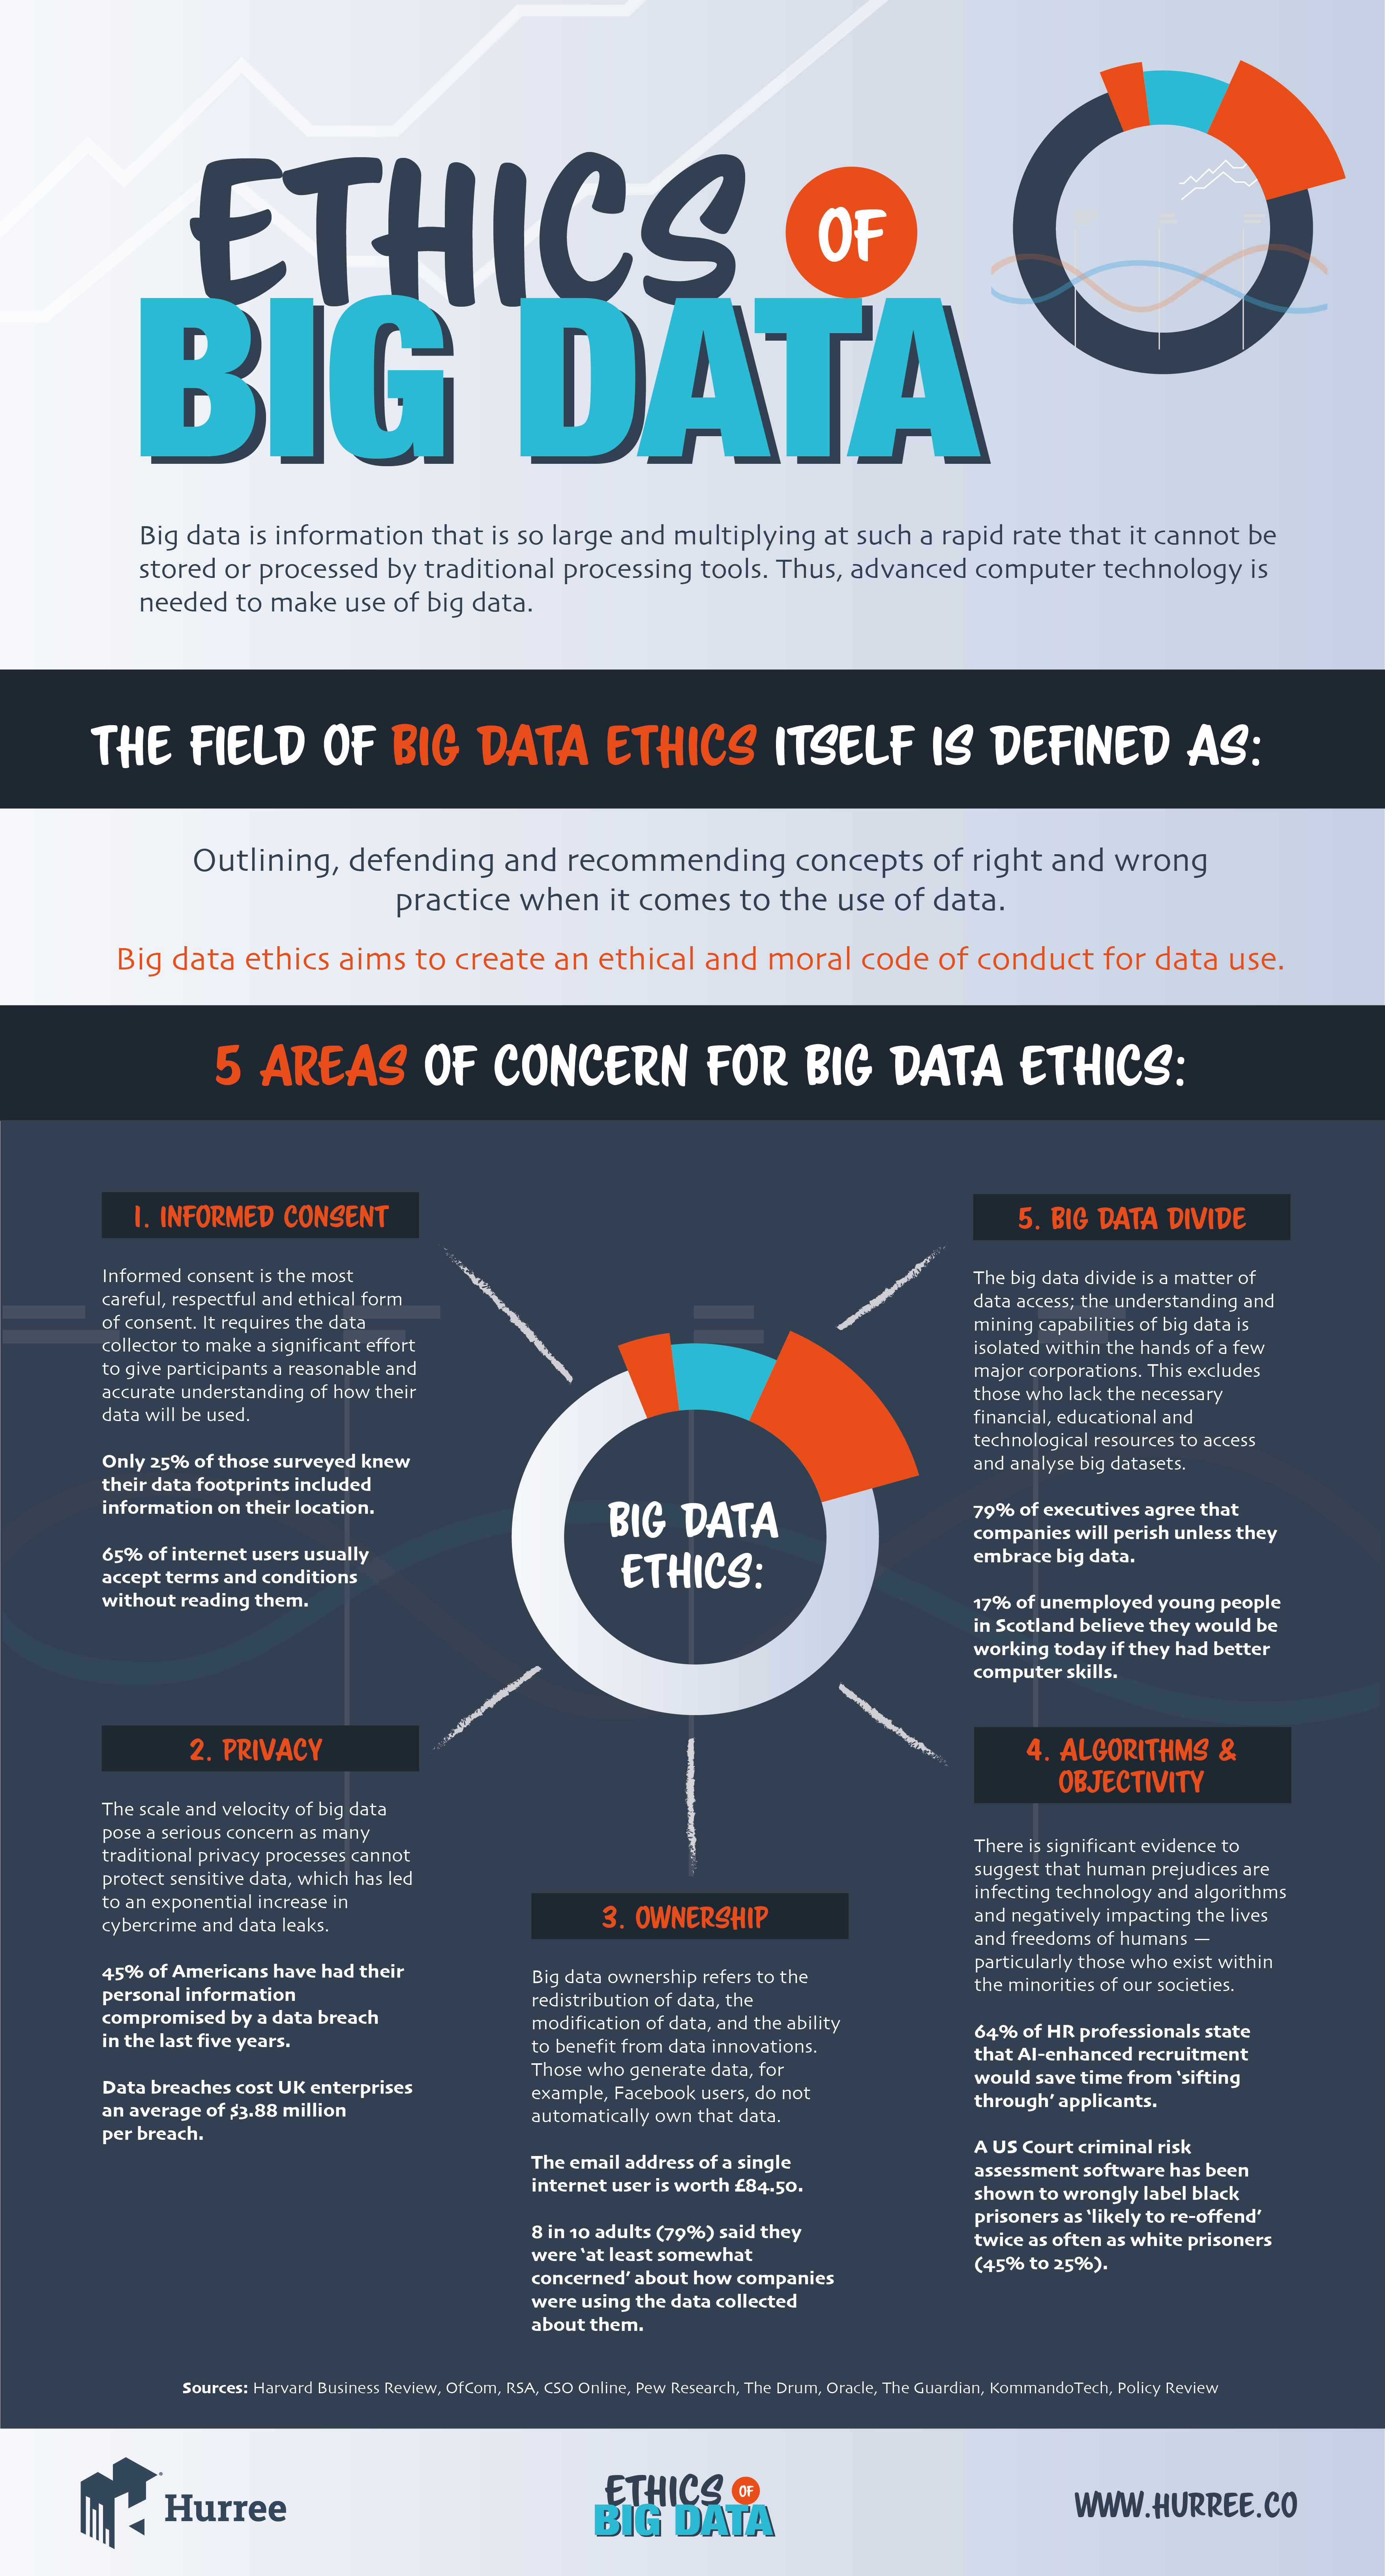 data ethics case study